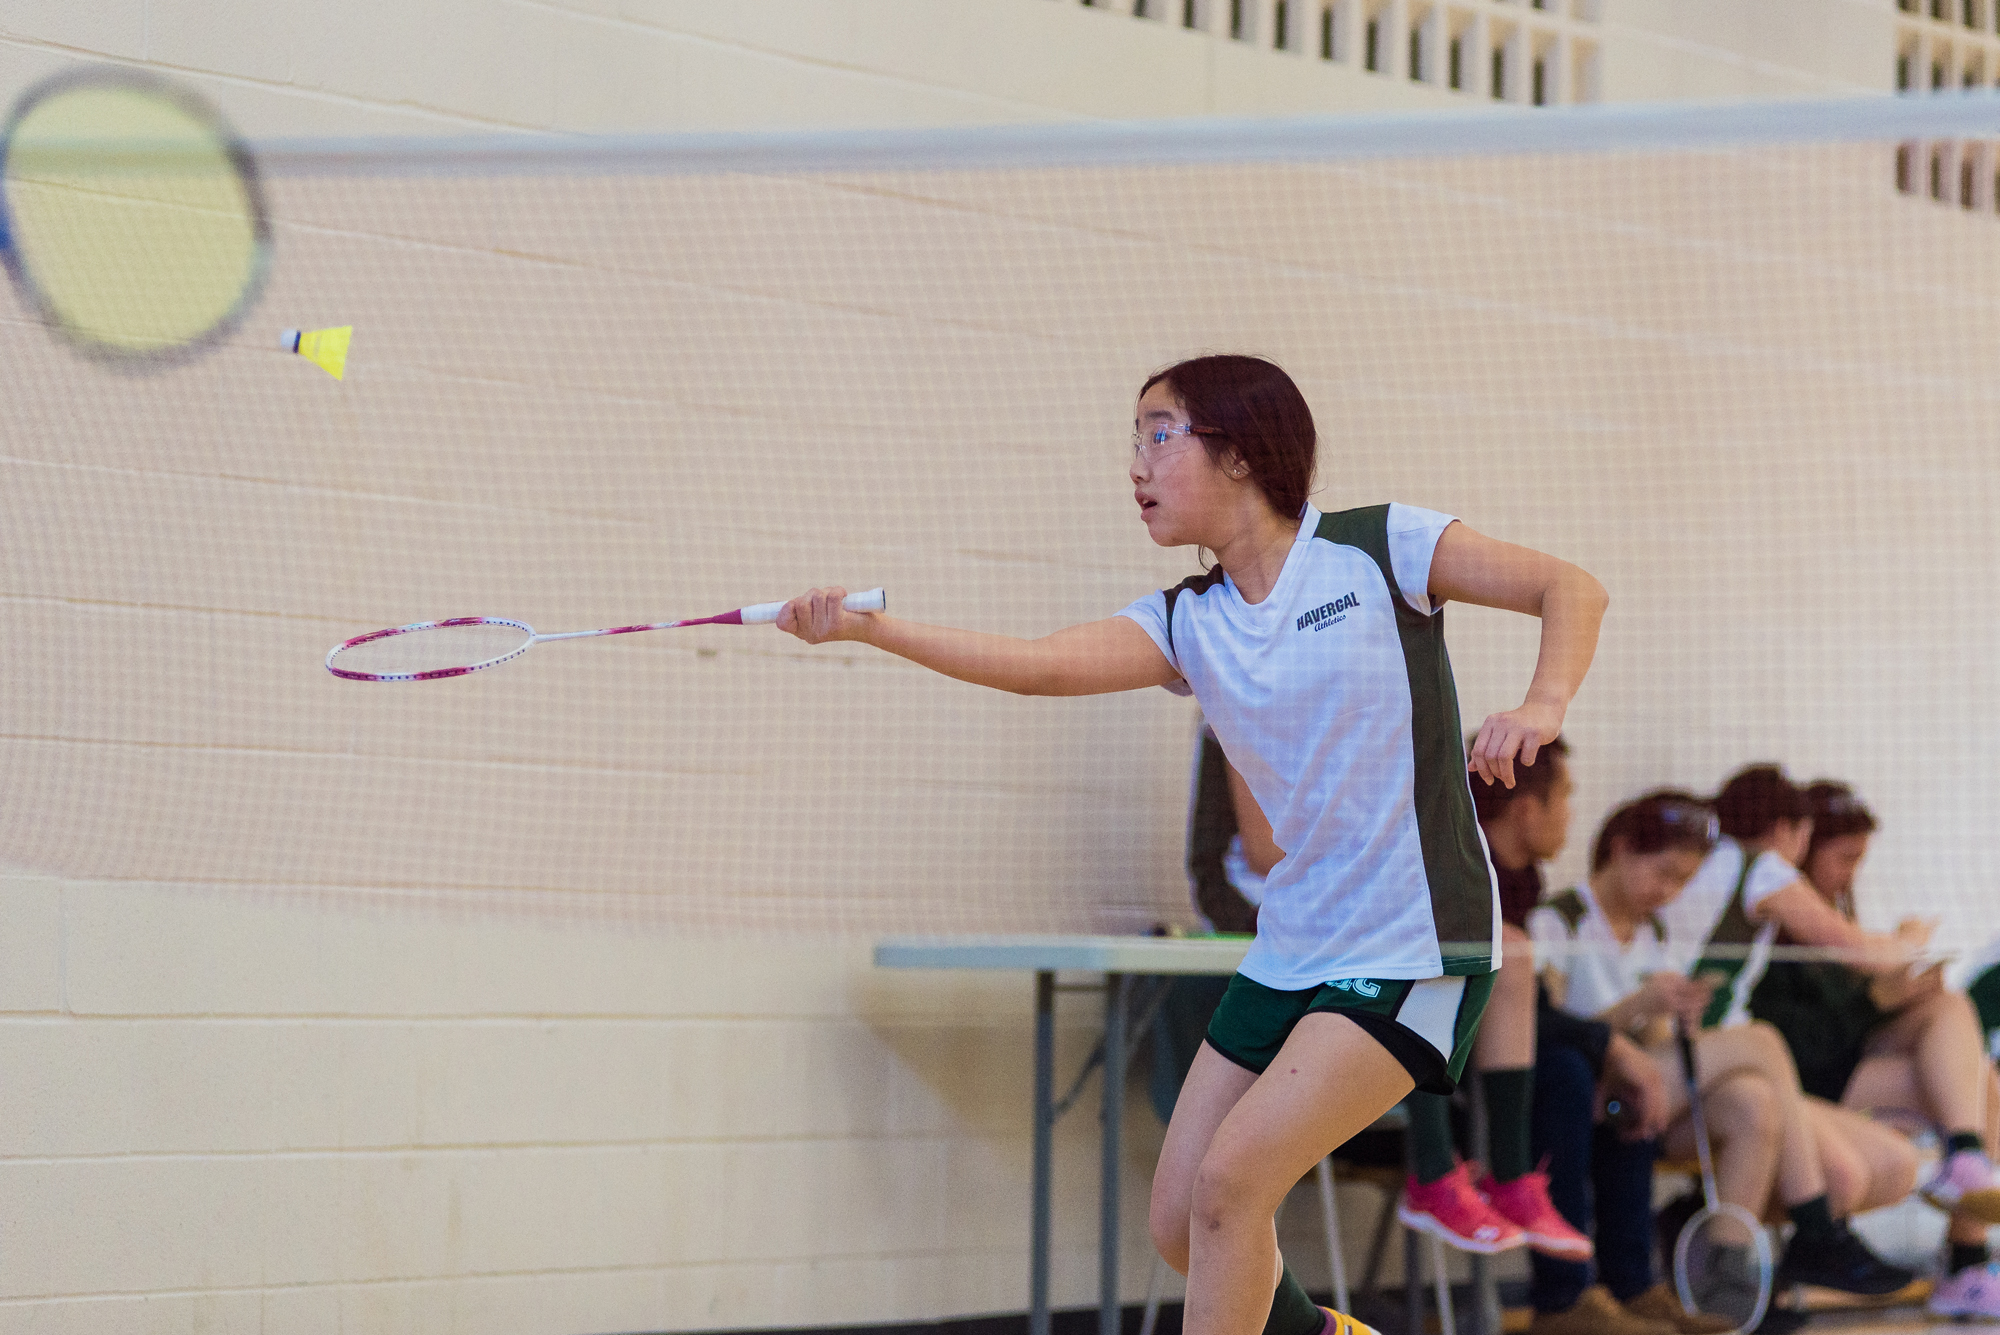 Student playing badminton.